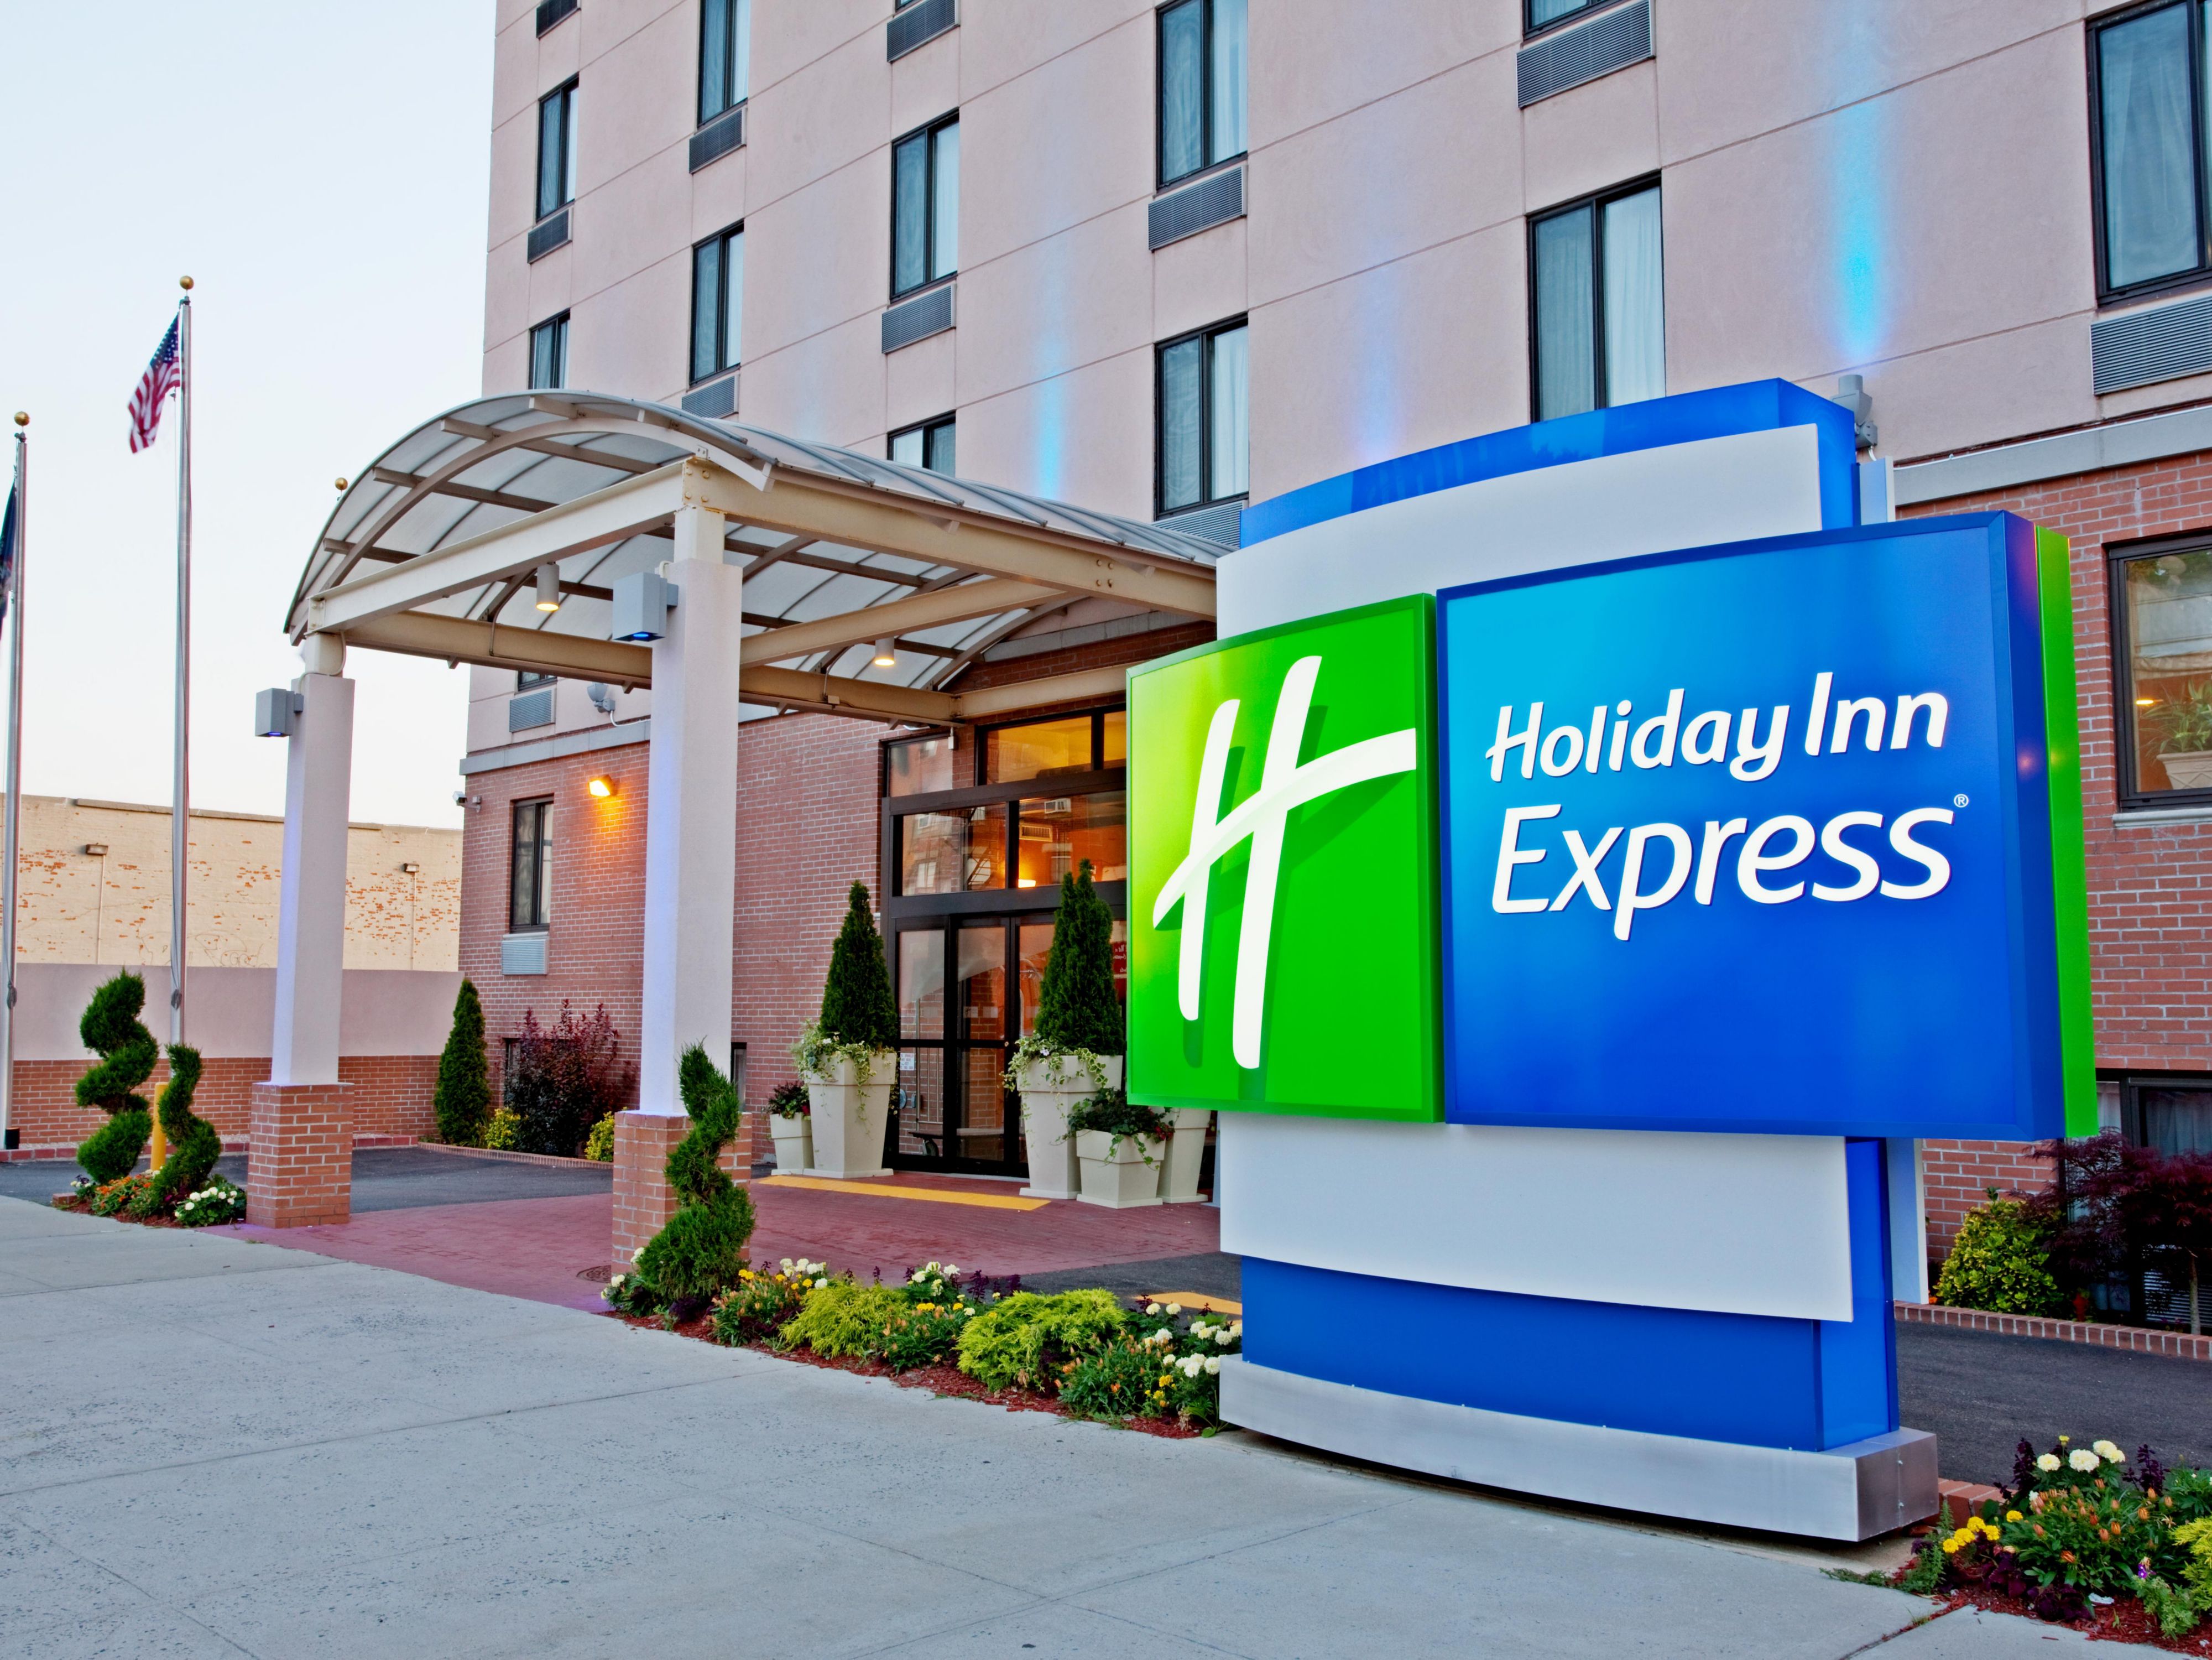 22+ Best Bilder Holiay Inn Express - Holiday Inn Express & Suites Perry - Hotel Reviews & Photos : Holiday inn express® hotels official website.